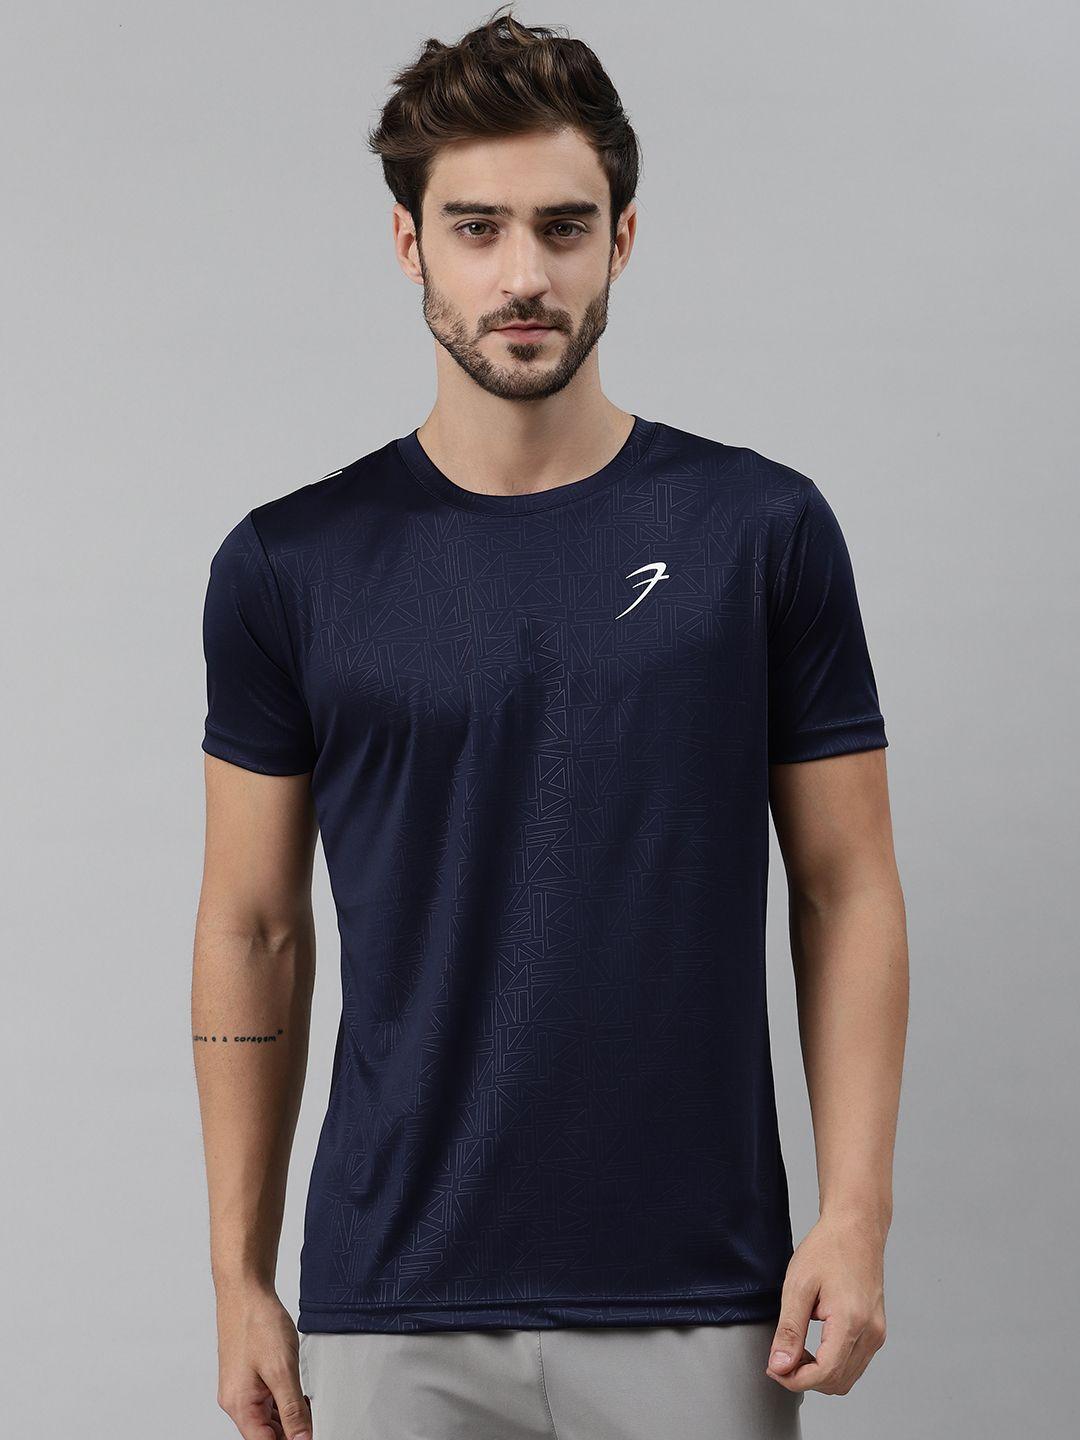 fuaark men navy blue geometric print round neck t-shirt